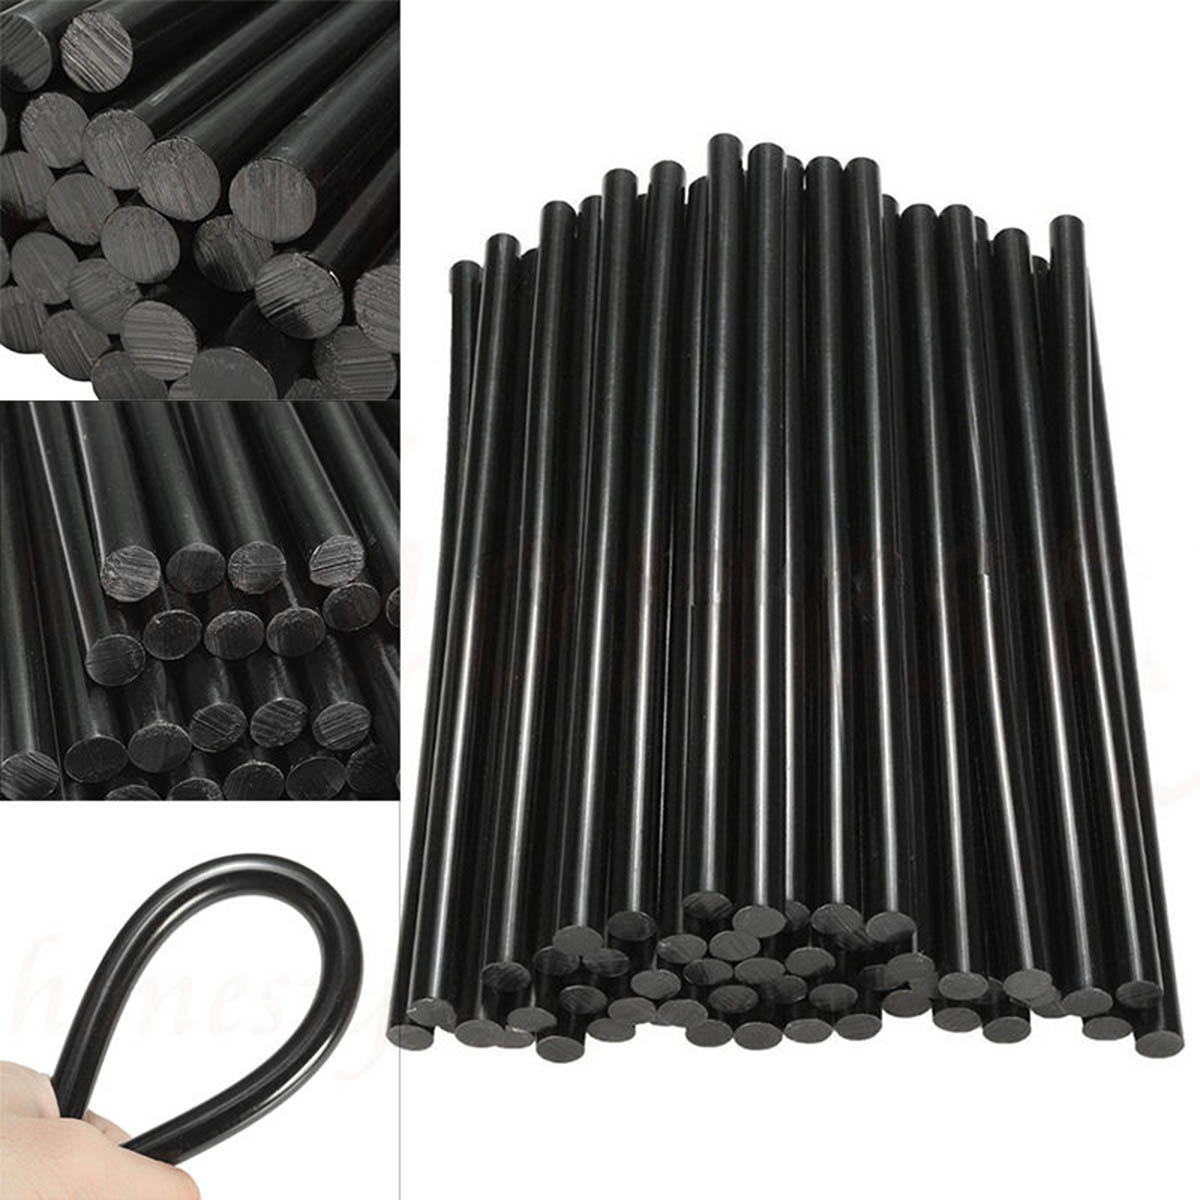 High-Viscosity-Black-Hot-Melt-Glue-Sticks-Hot-Melt-Electric-Car-Audio-Adhesive-Sticks-Craft-11x200mm-1426543